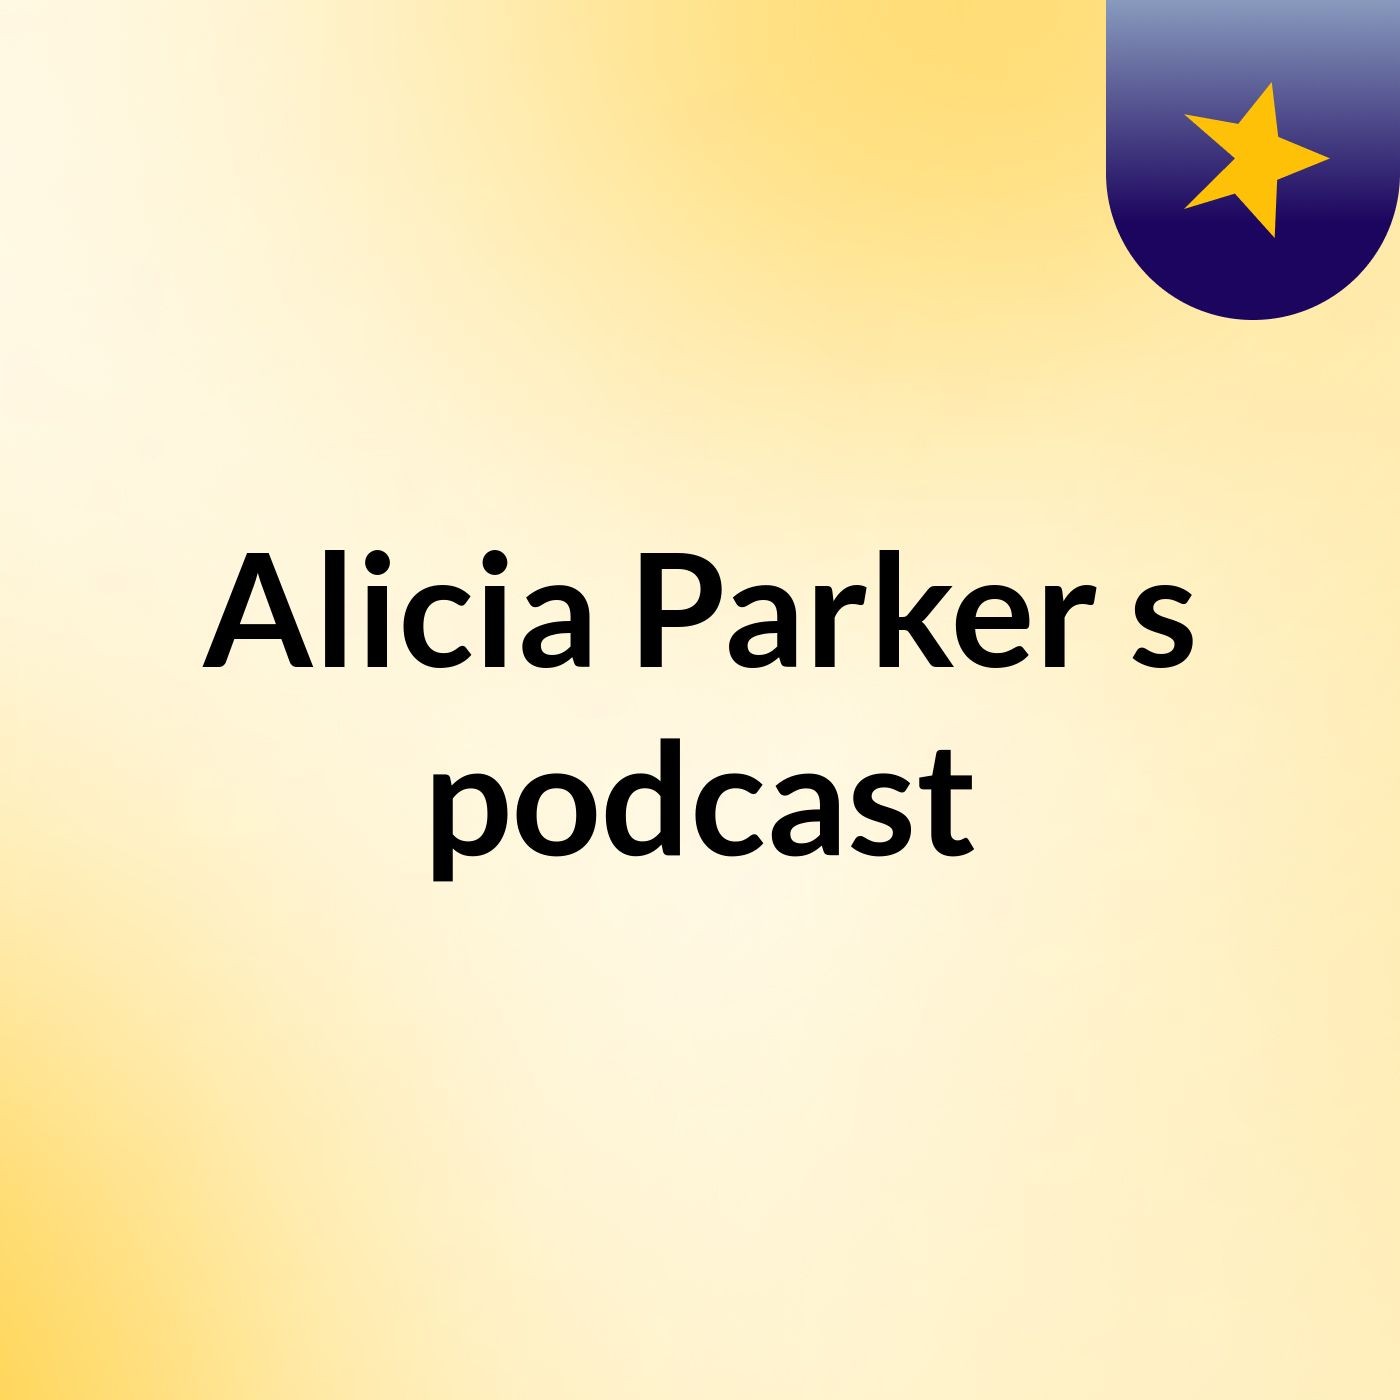 Alicia Parker's podcast